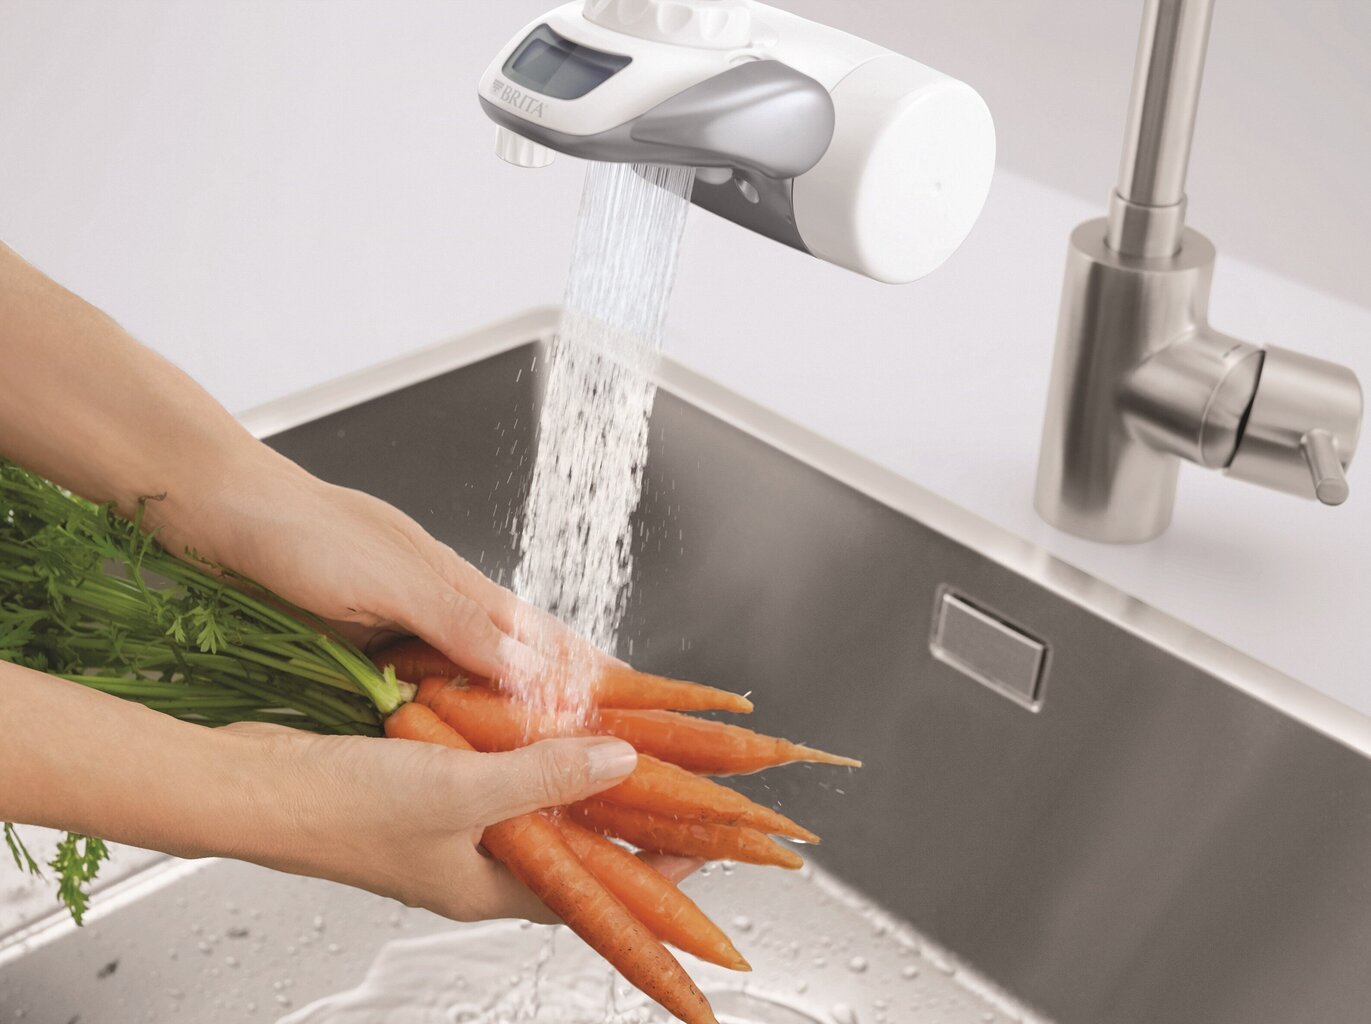 BRITA OnTap vandens filtravimo sistema 600L цена и информация | Virtuvinių plautuvių ir maišytuvų priedai | pigu.lt